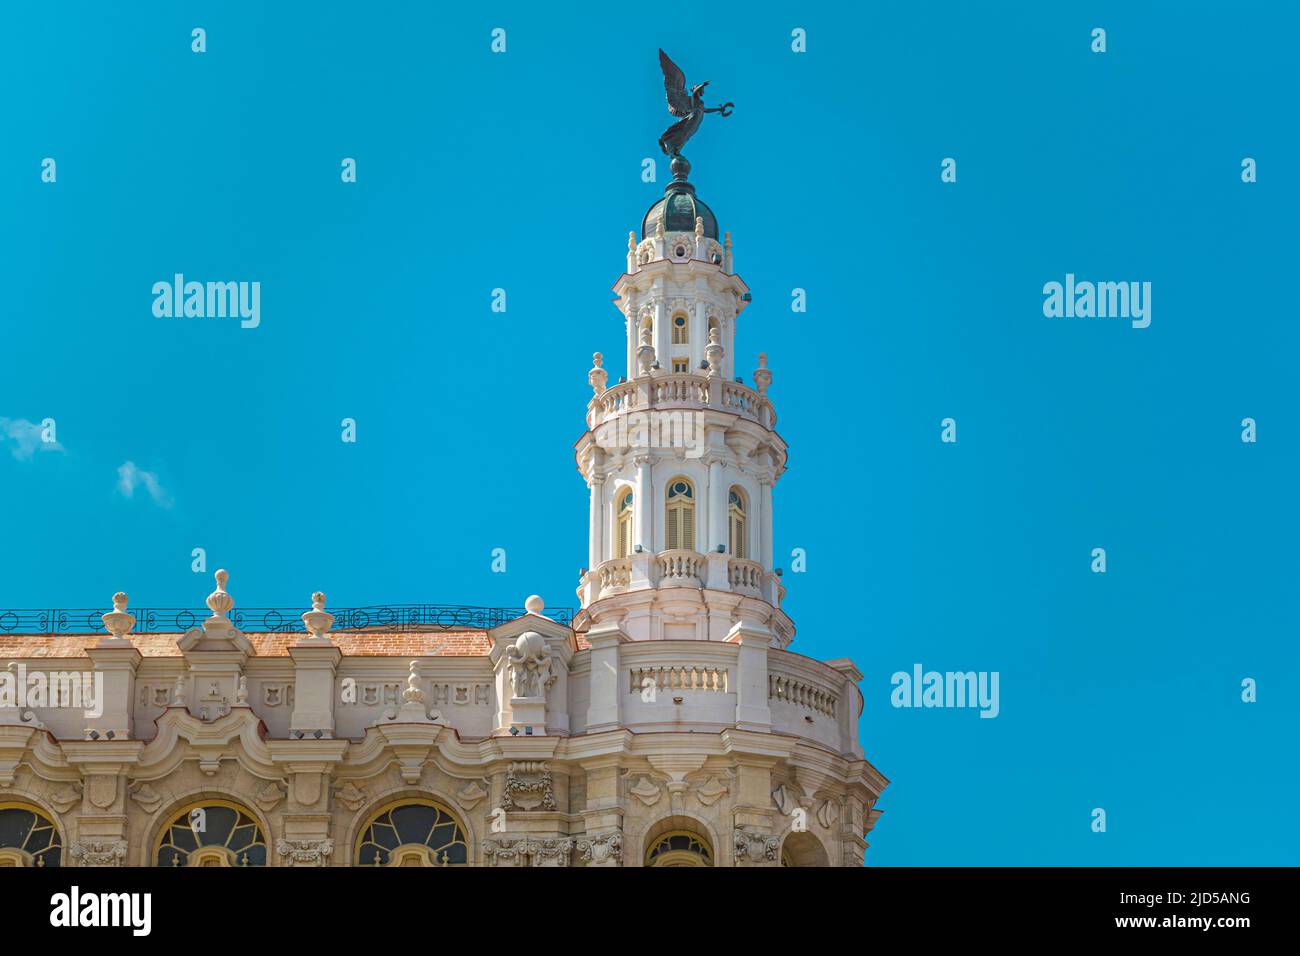 Detailed photo of the Gran Teatro de la Habana in Havana, Cuba Stock Photo